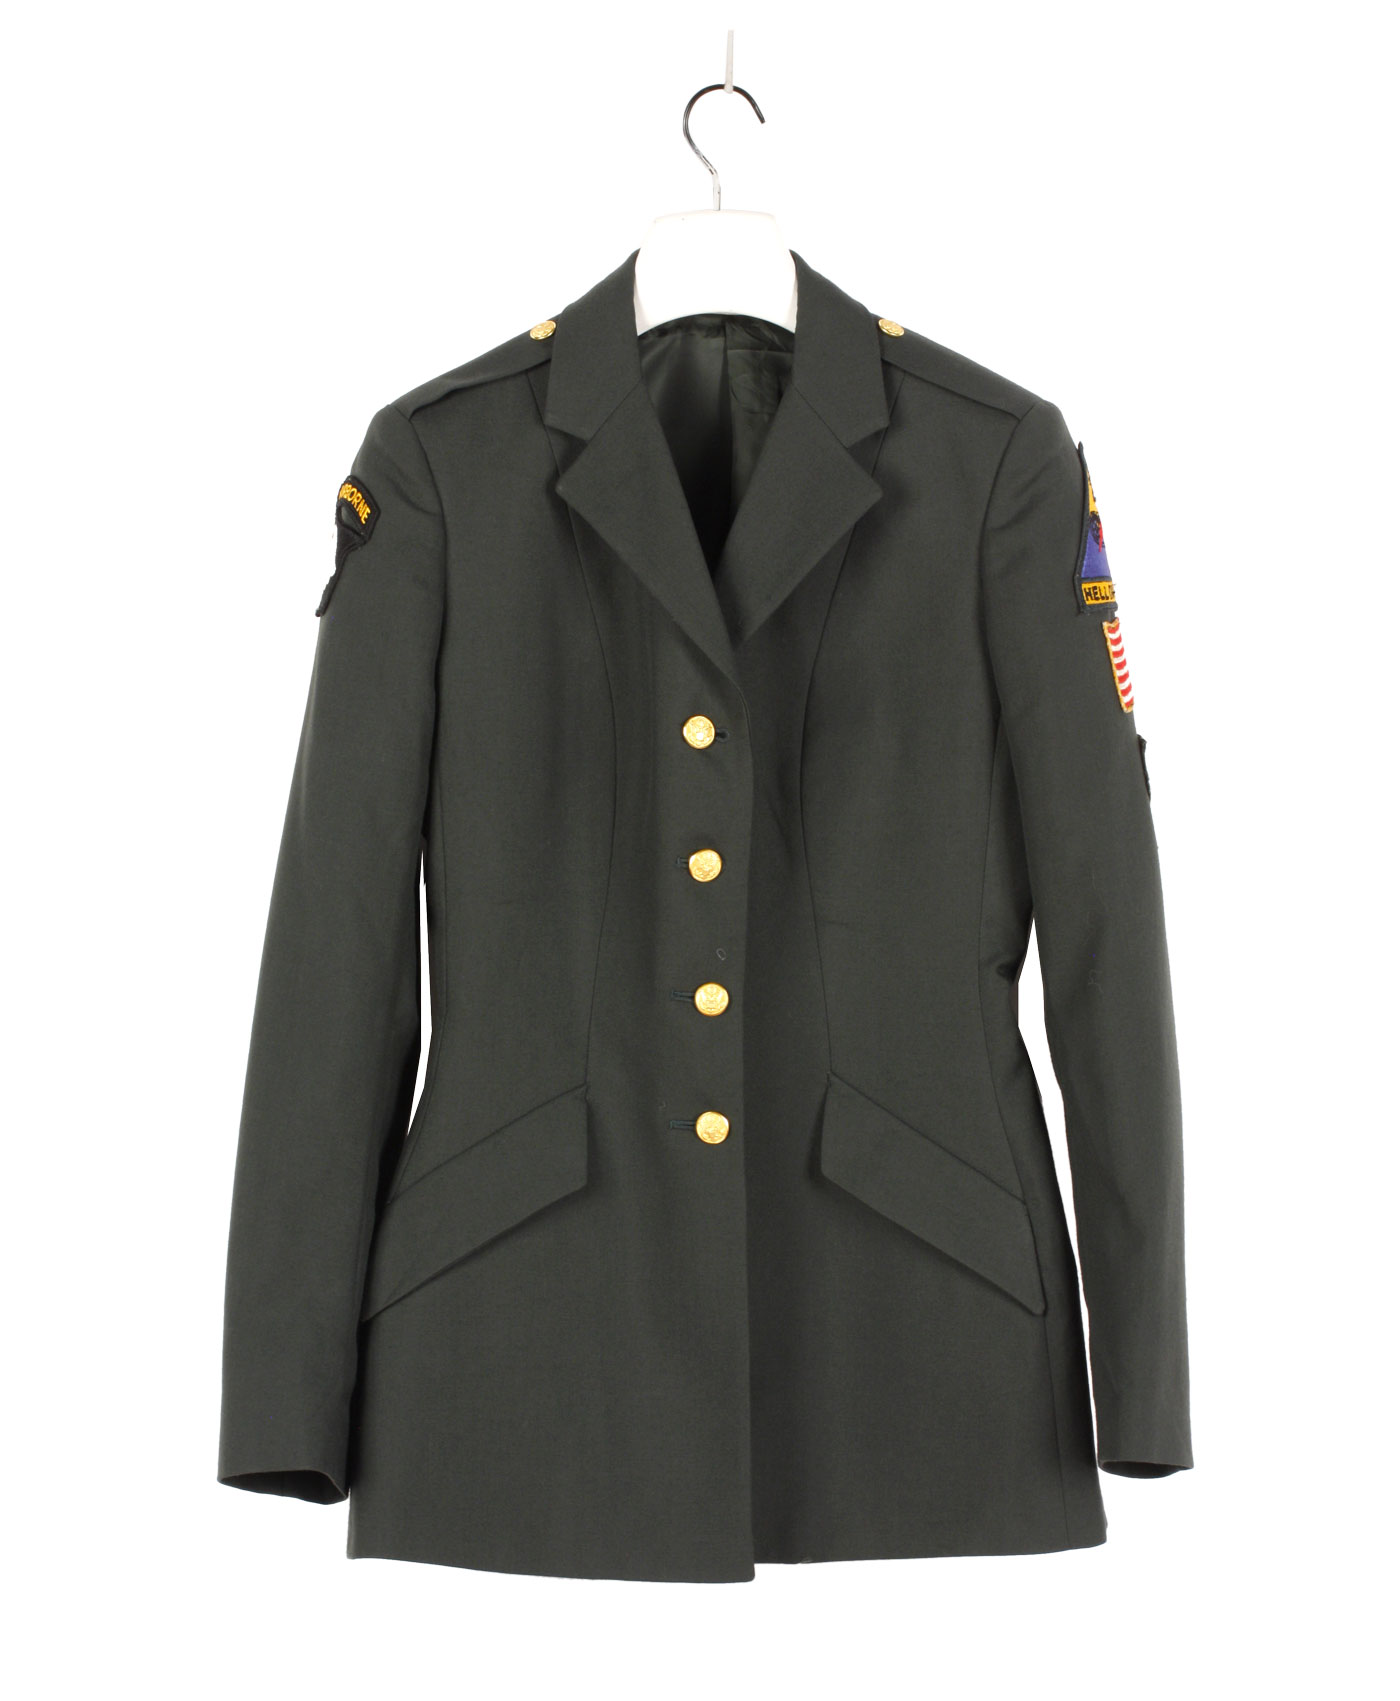 U.S. Woman military Jacket ’60/70s